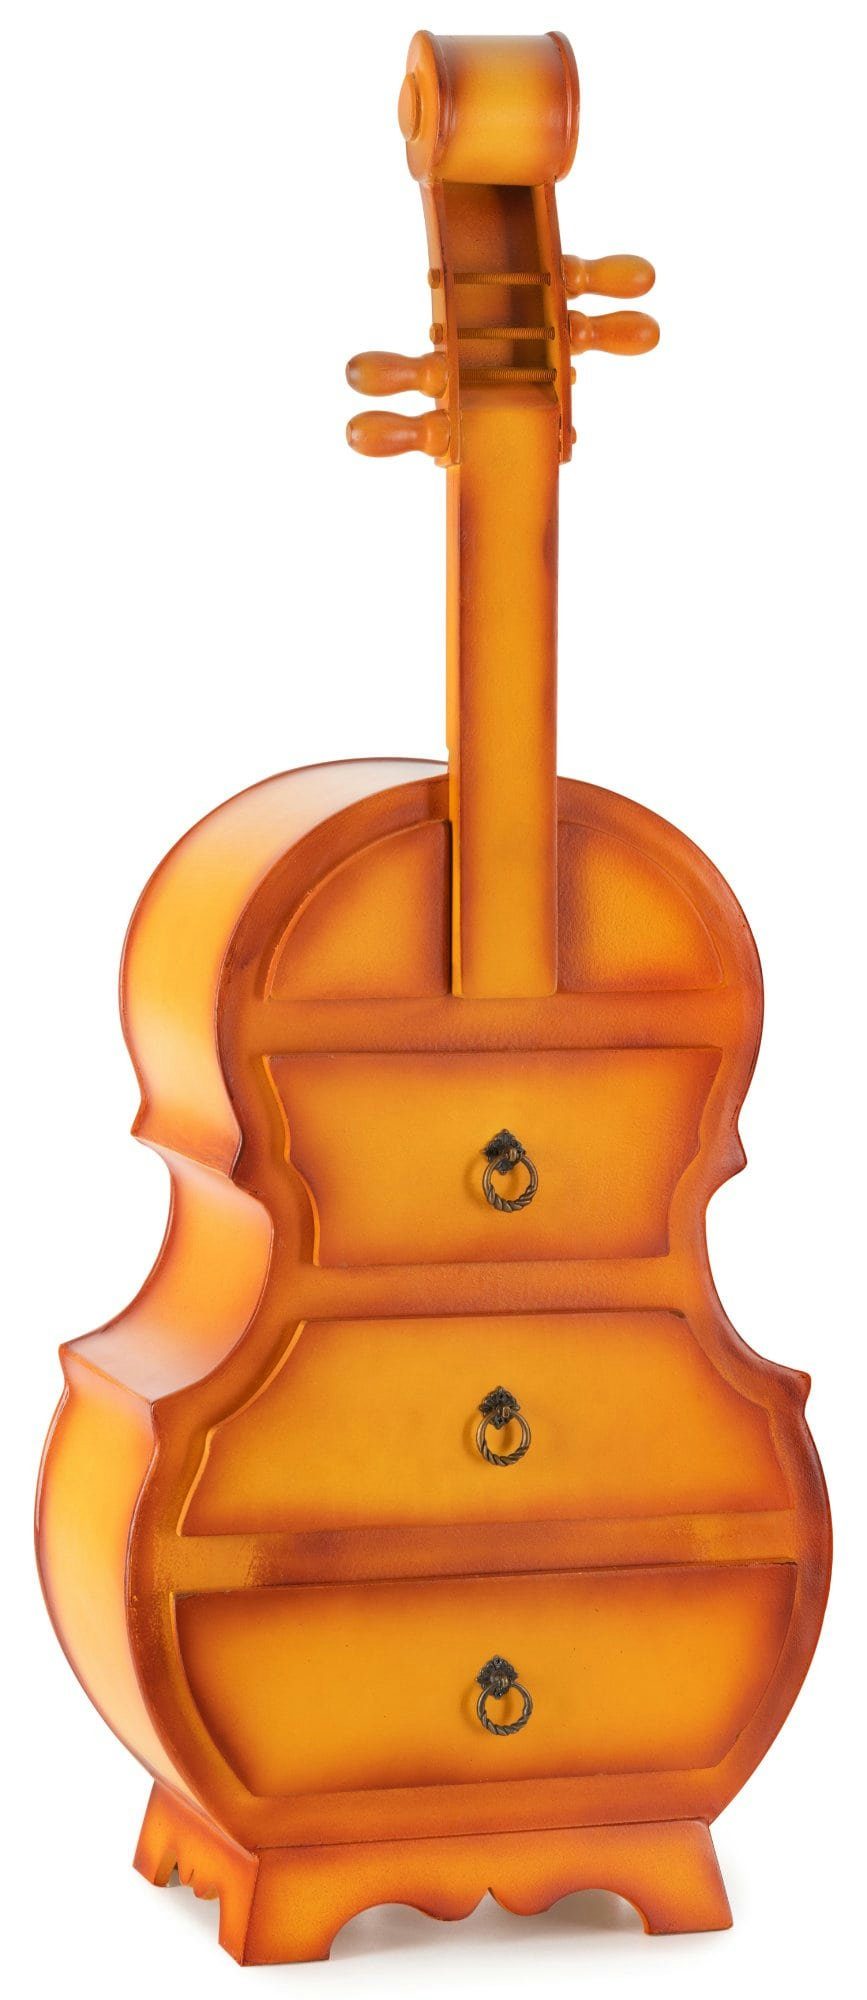 Stagecaptain Kommode SK-1013 Stradivino Schrankkommode (Rustikale Nachtkommode), Schubladenkommode mit 3 Schubkästen im Cello Design Sunburst